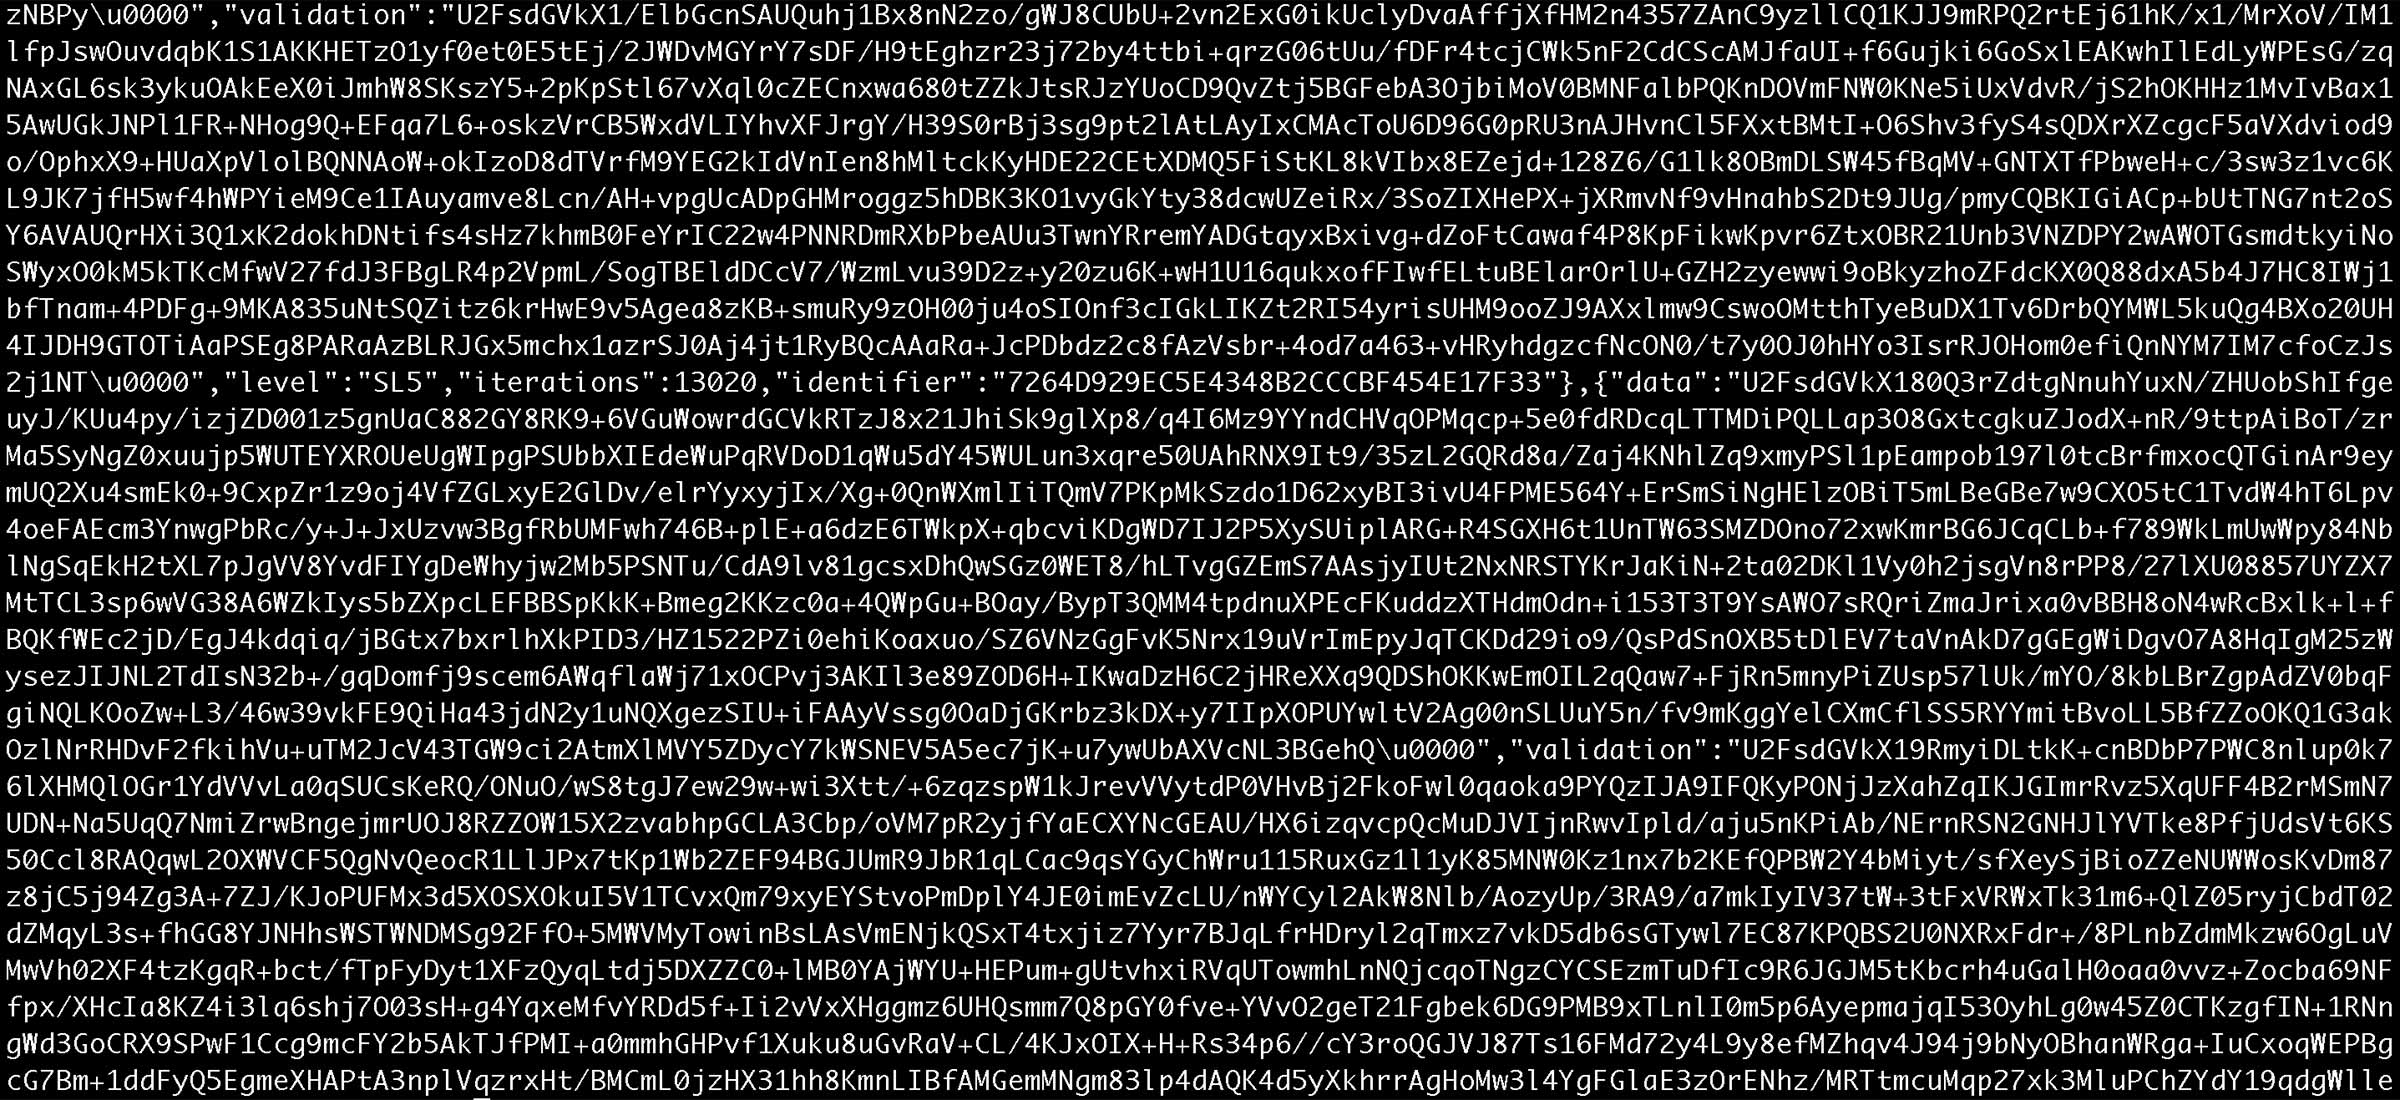 Encrypted Data